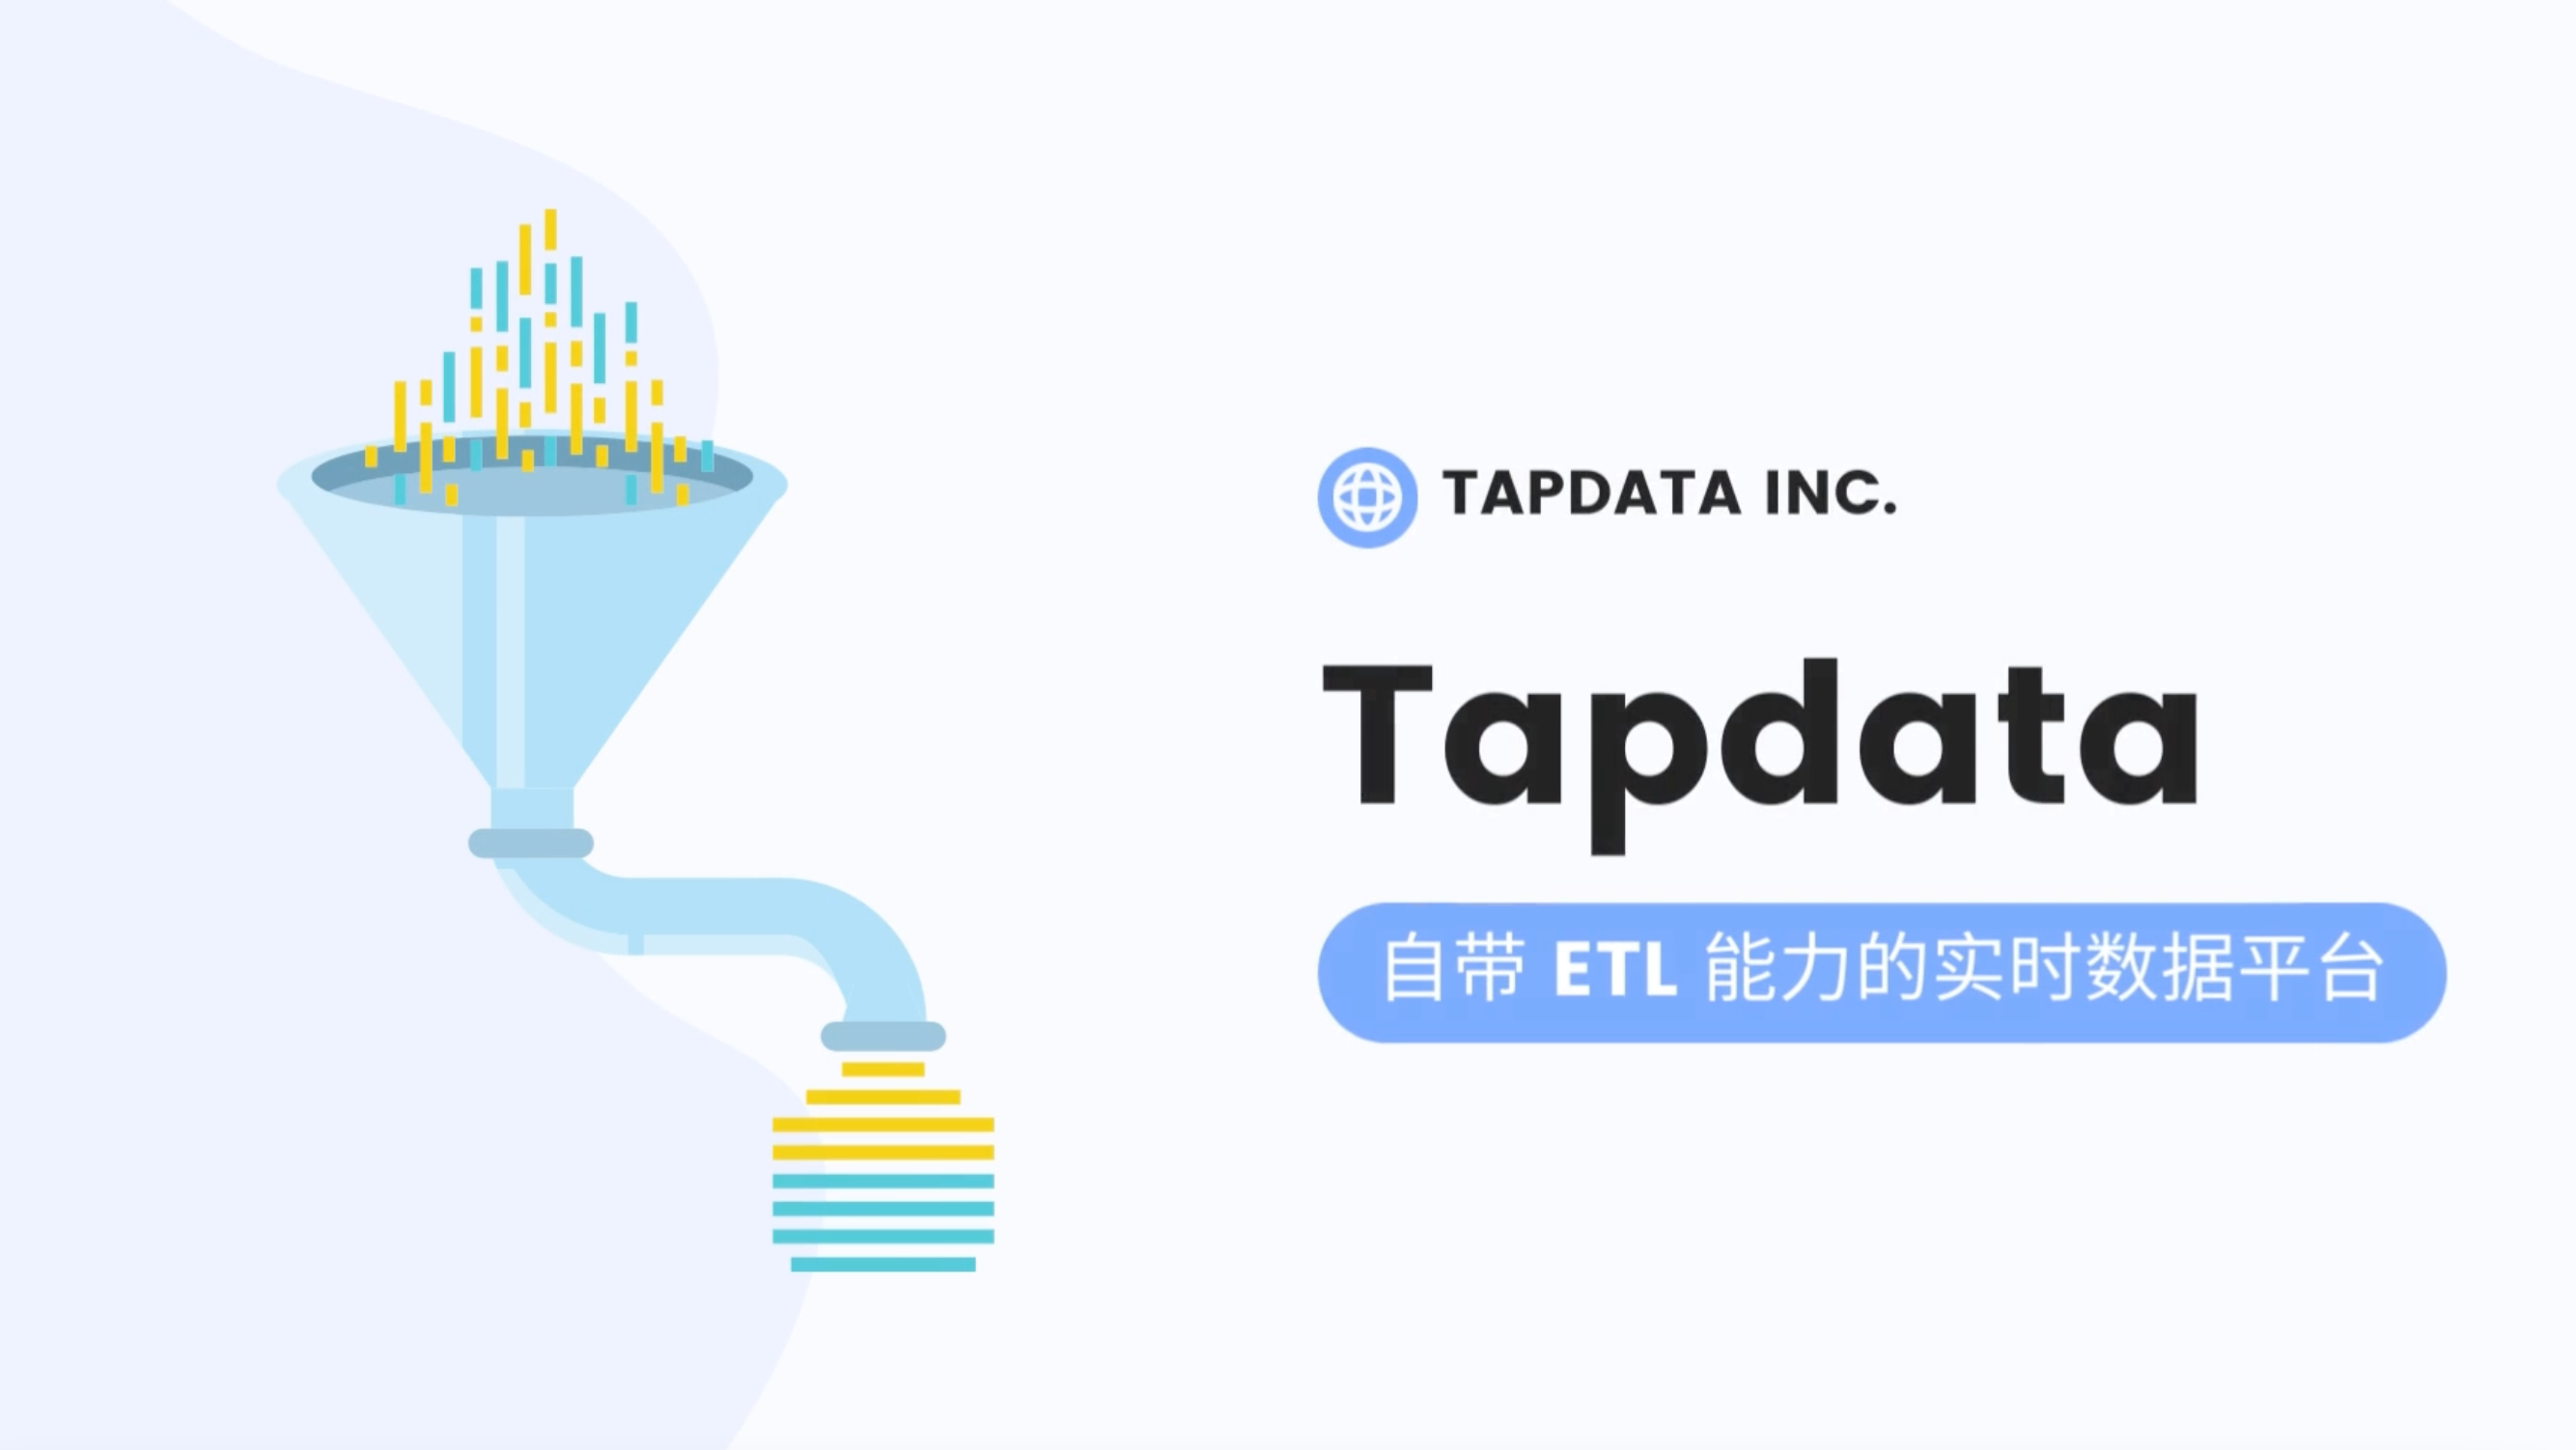 Tapdata 的 2.0 版 ，开源的 Live Data Platform 现已发布